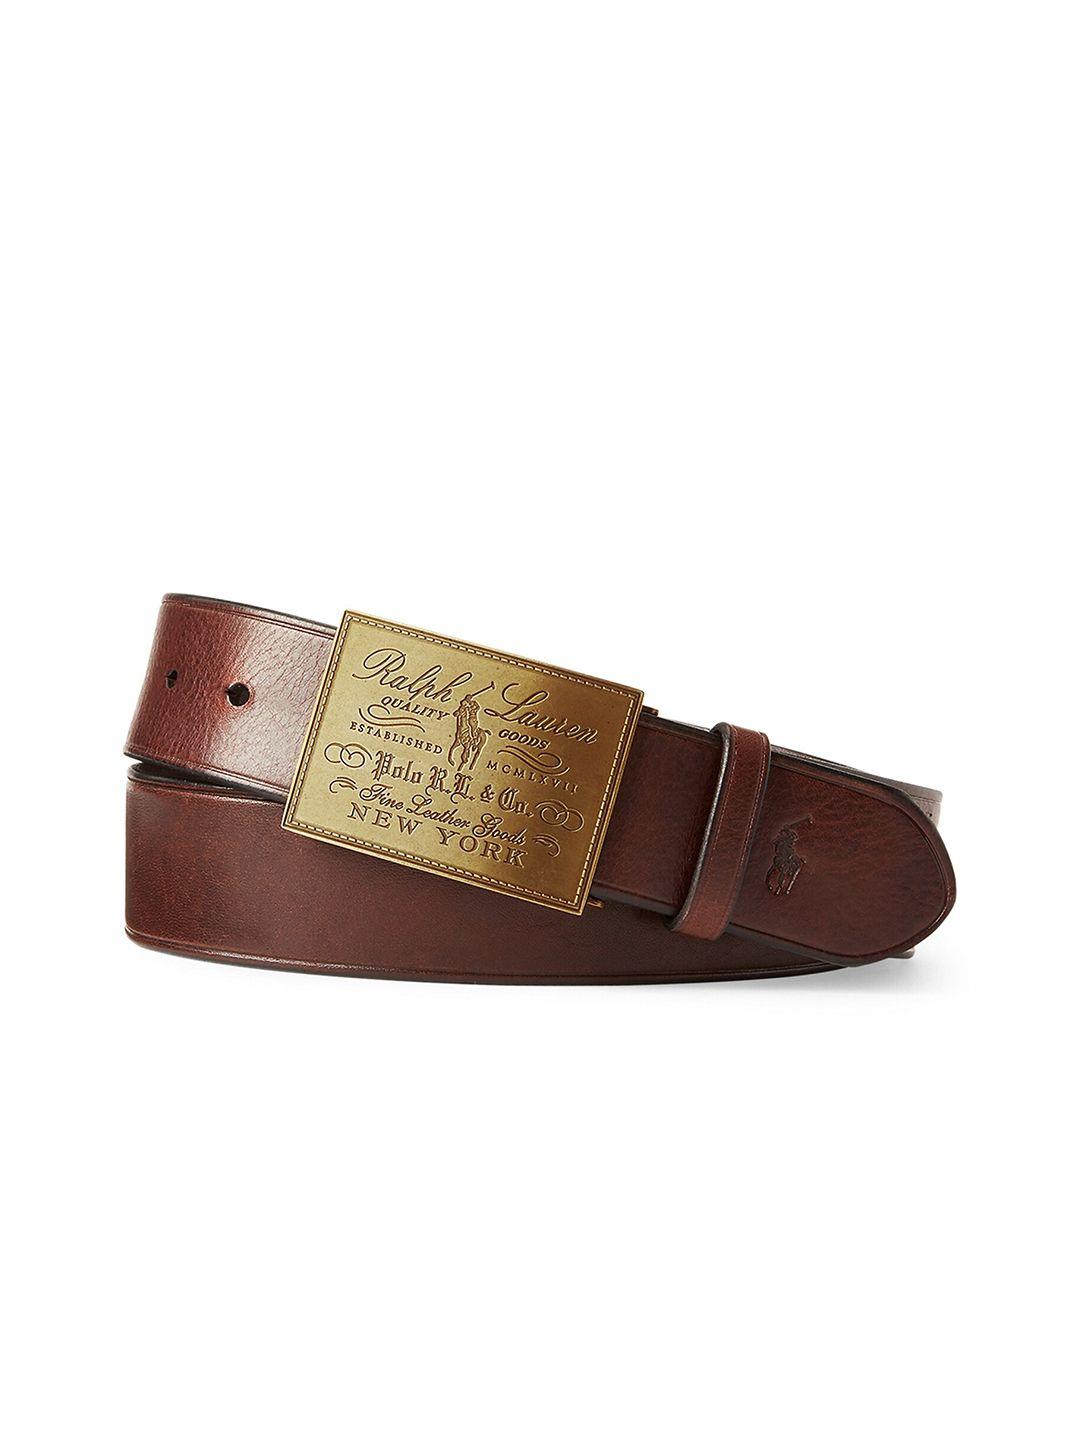 polo-ralph-lauren-men-leather-belt